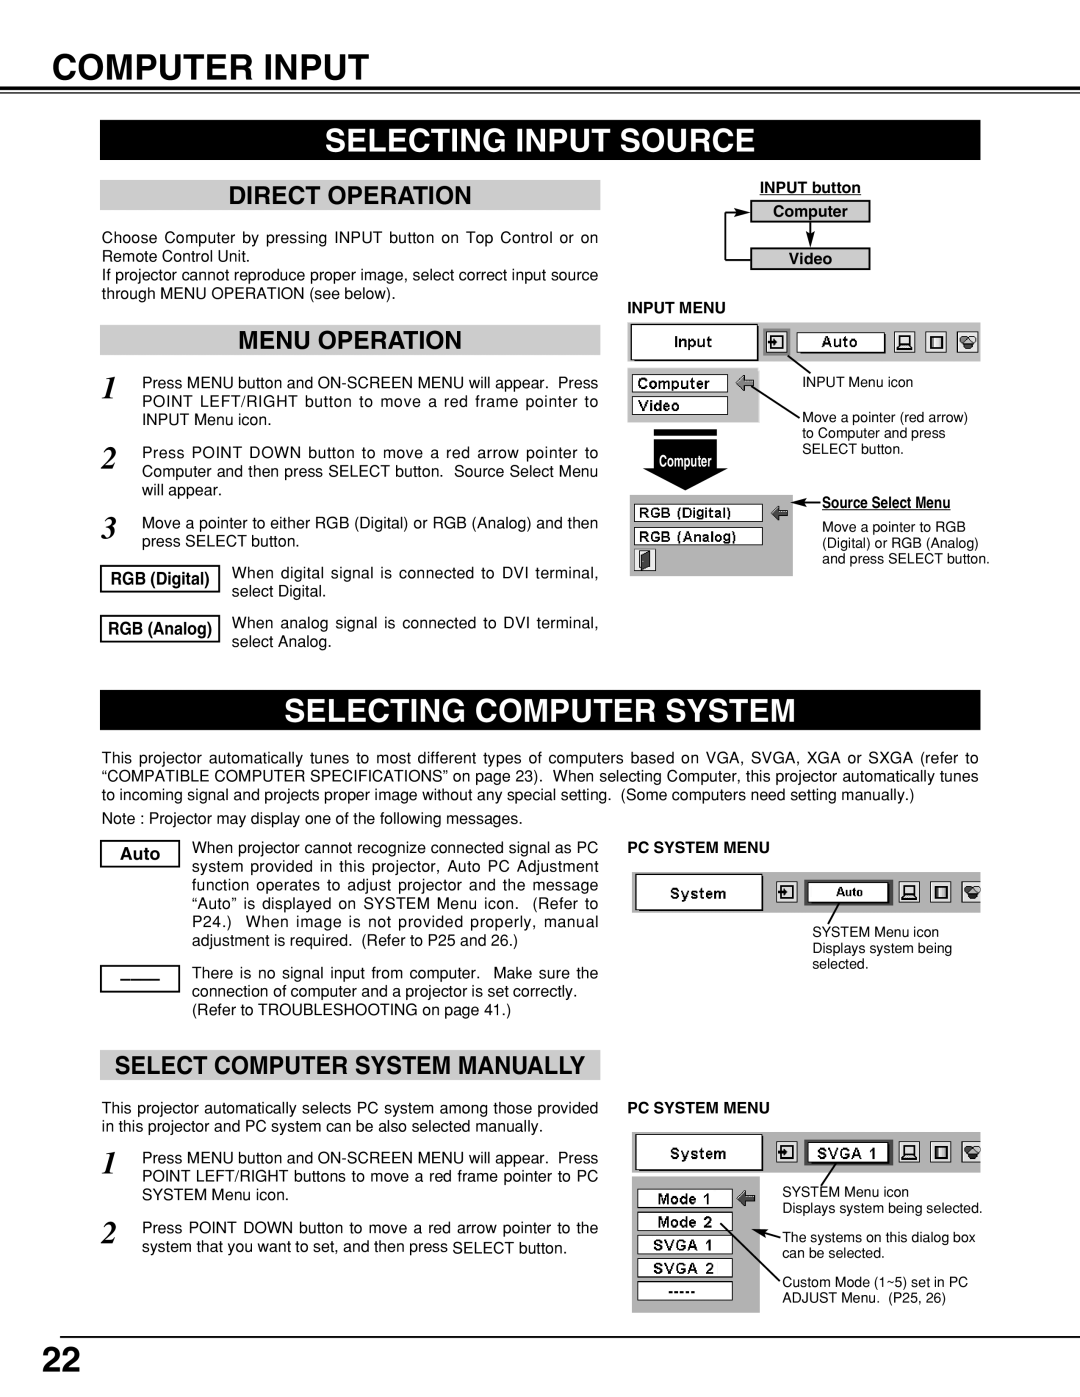 BOXLIGHT CP-306t manual Computer Input, Selecting Input Source, Selecting Computer System, Select Computer System Manually 